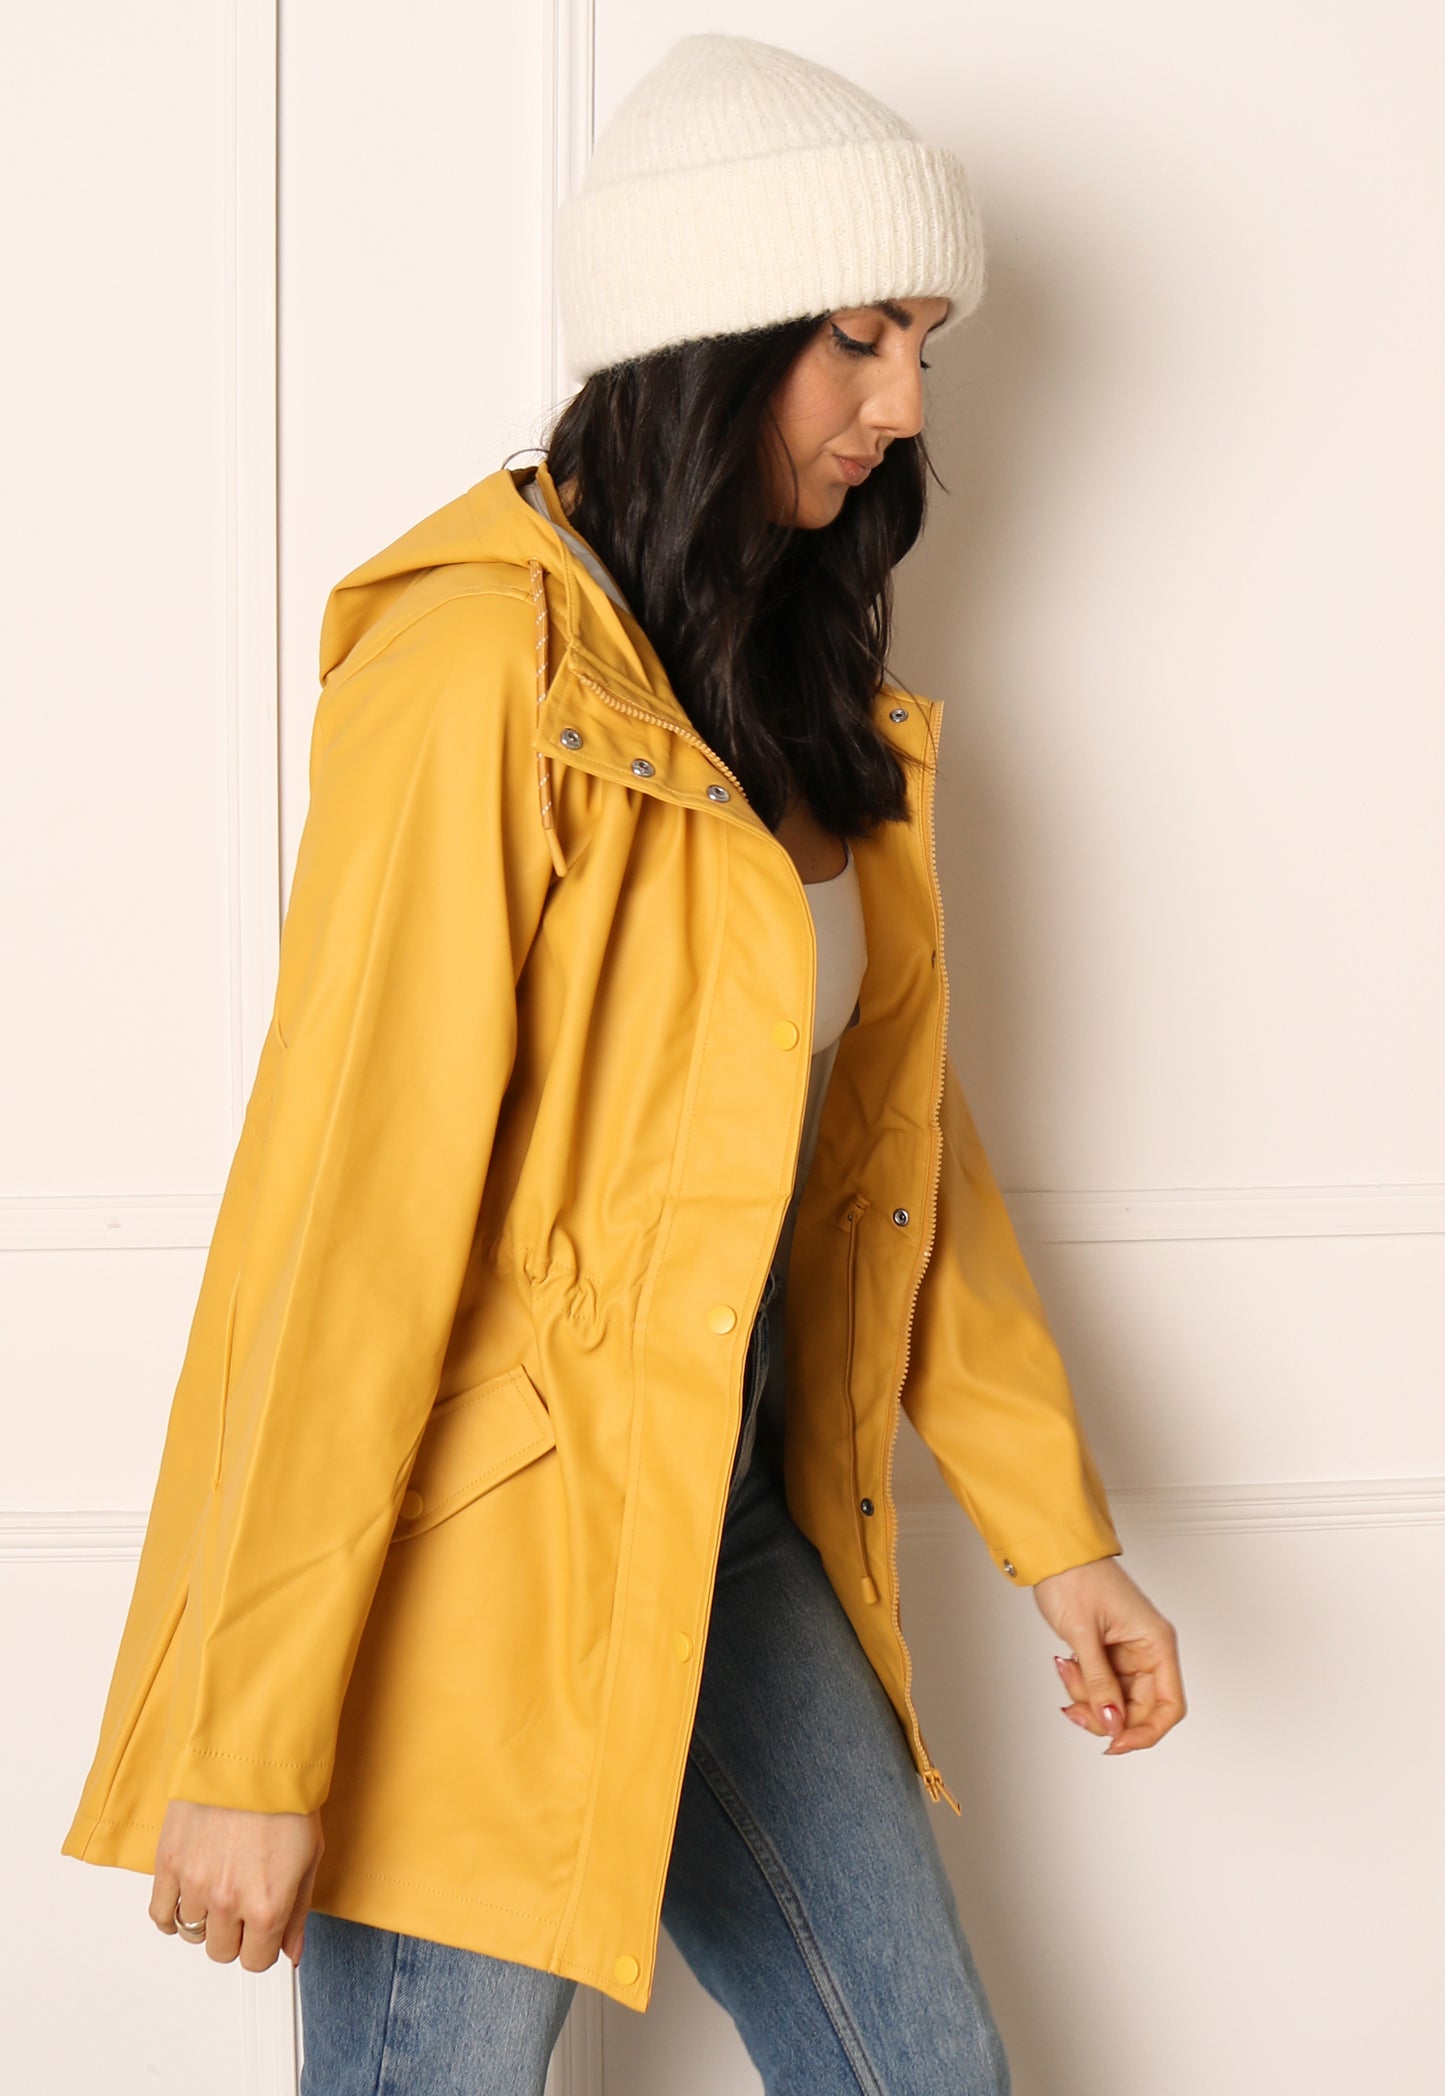 VERO MODA Lou Rubberised Matte Hooded Raincoat Mac in Mustard Yellow - concretebartops